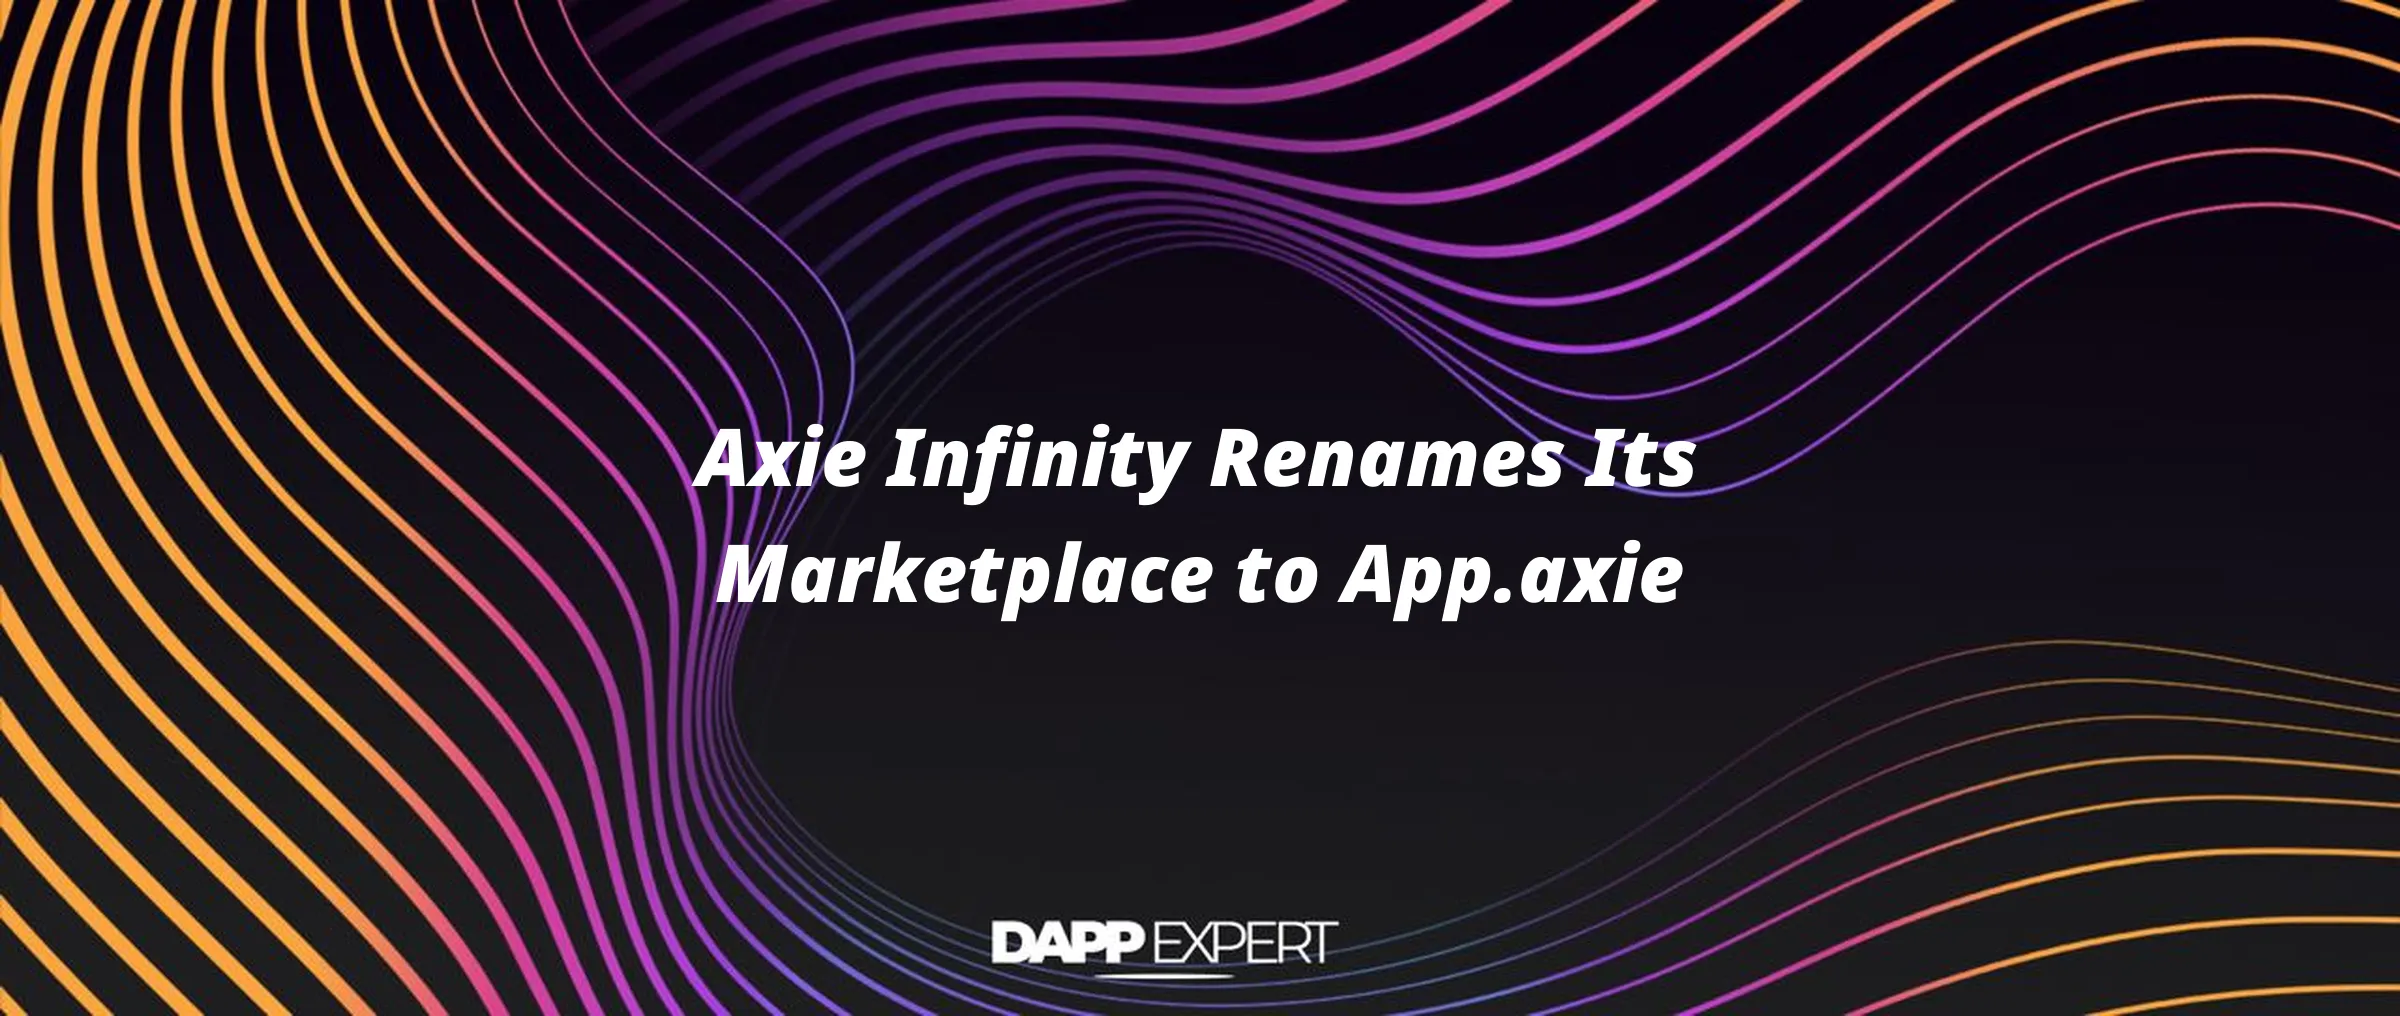 Axie Infinity Renames Its Marketplace to App.axie